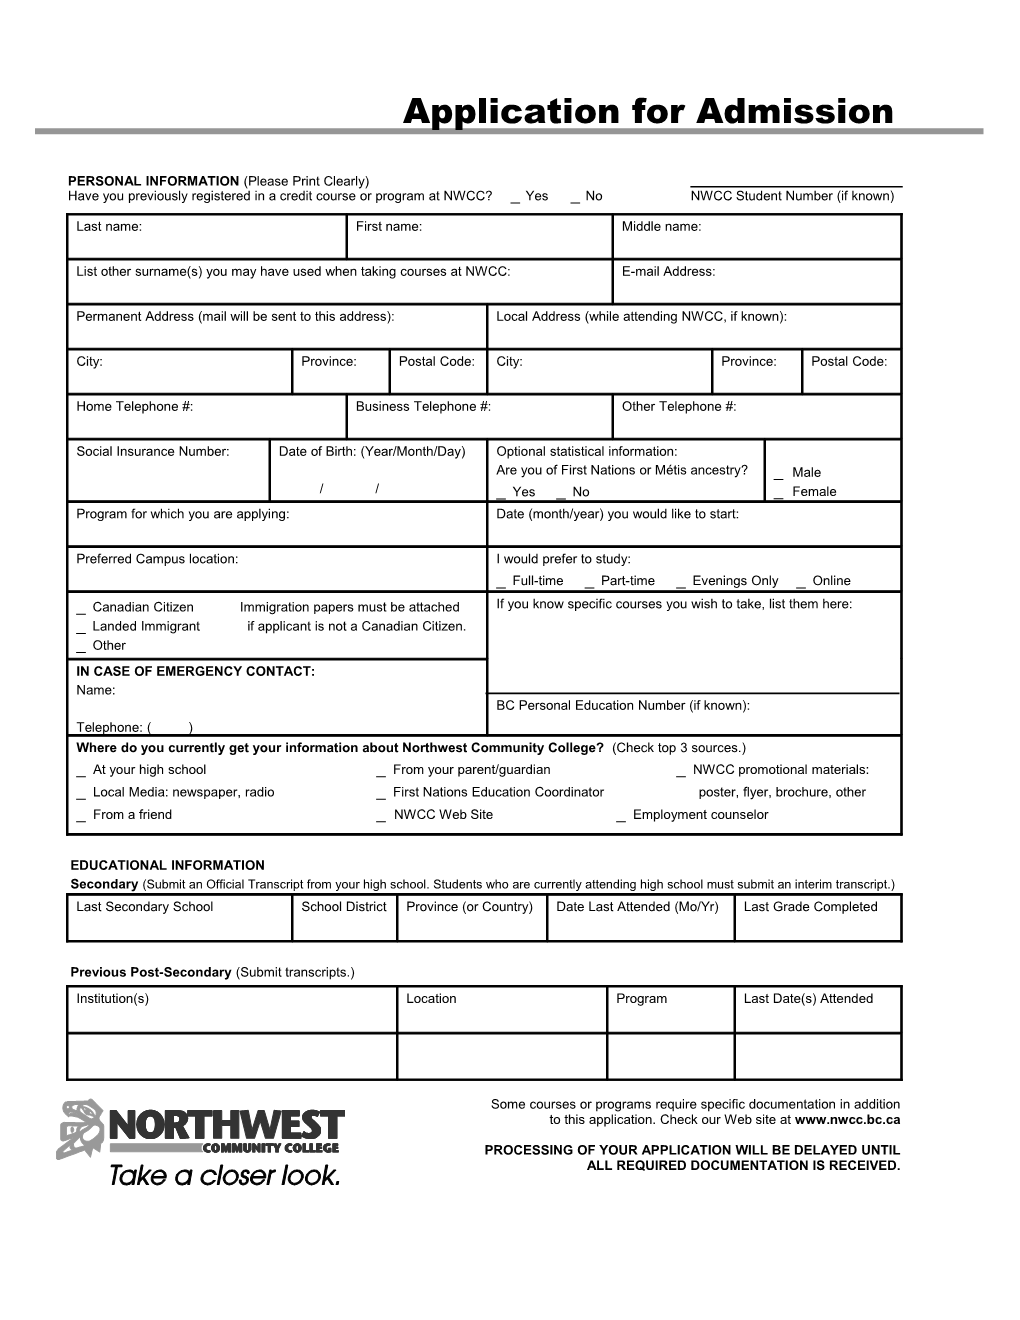 NWCC Application Form Word Doc